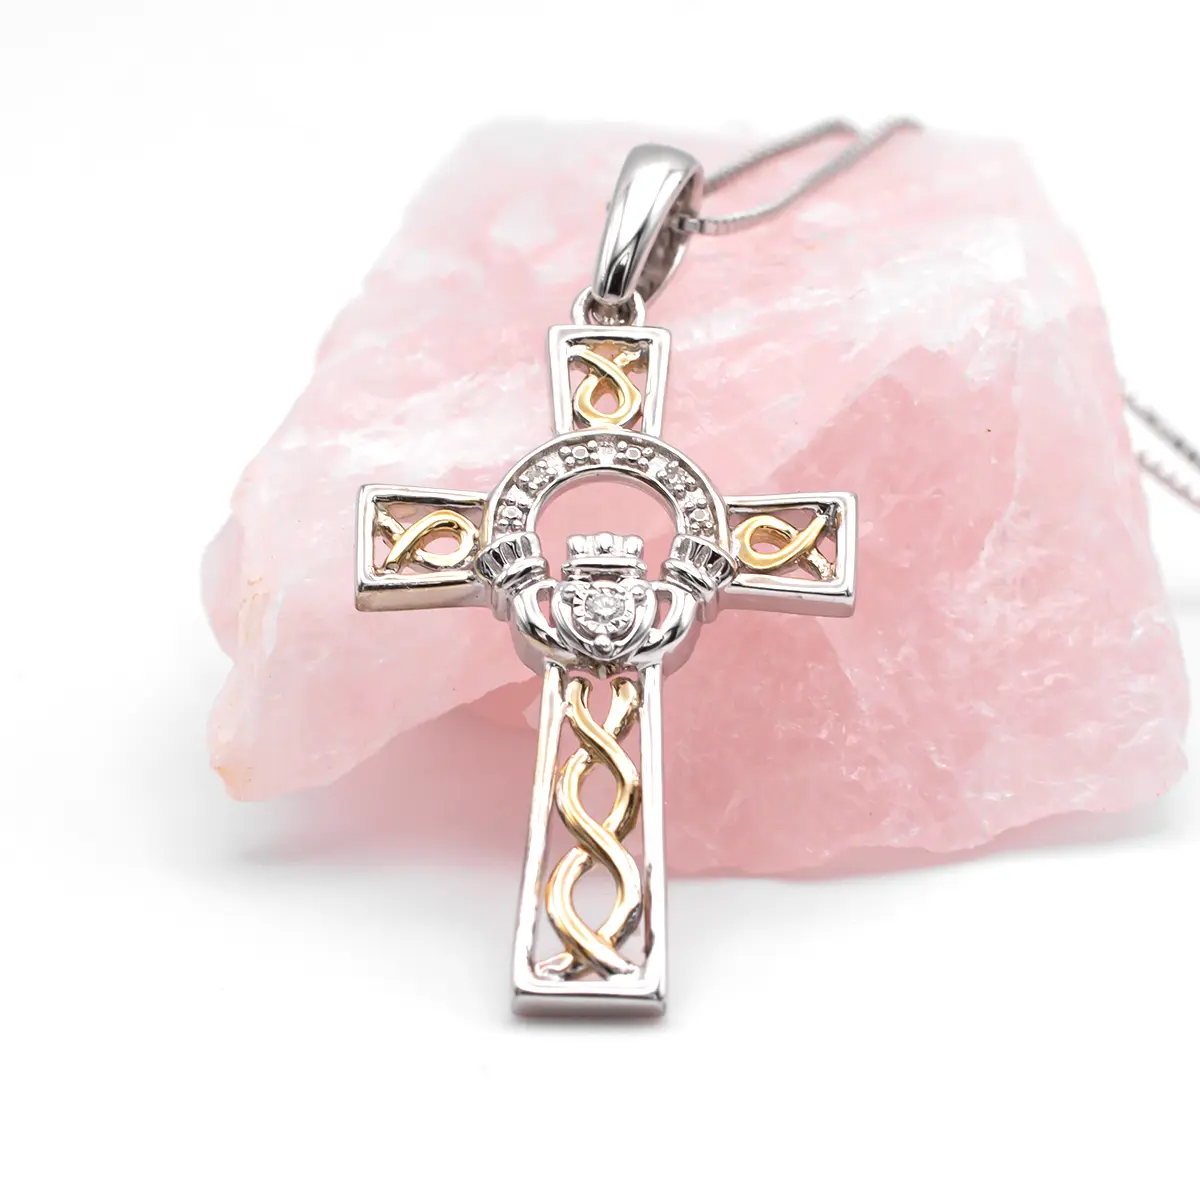 10k Gold & Silver Celtic Cross Claddagh Pendant With Diamond